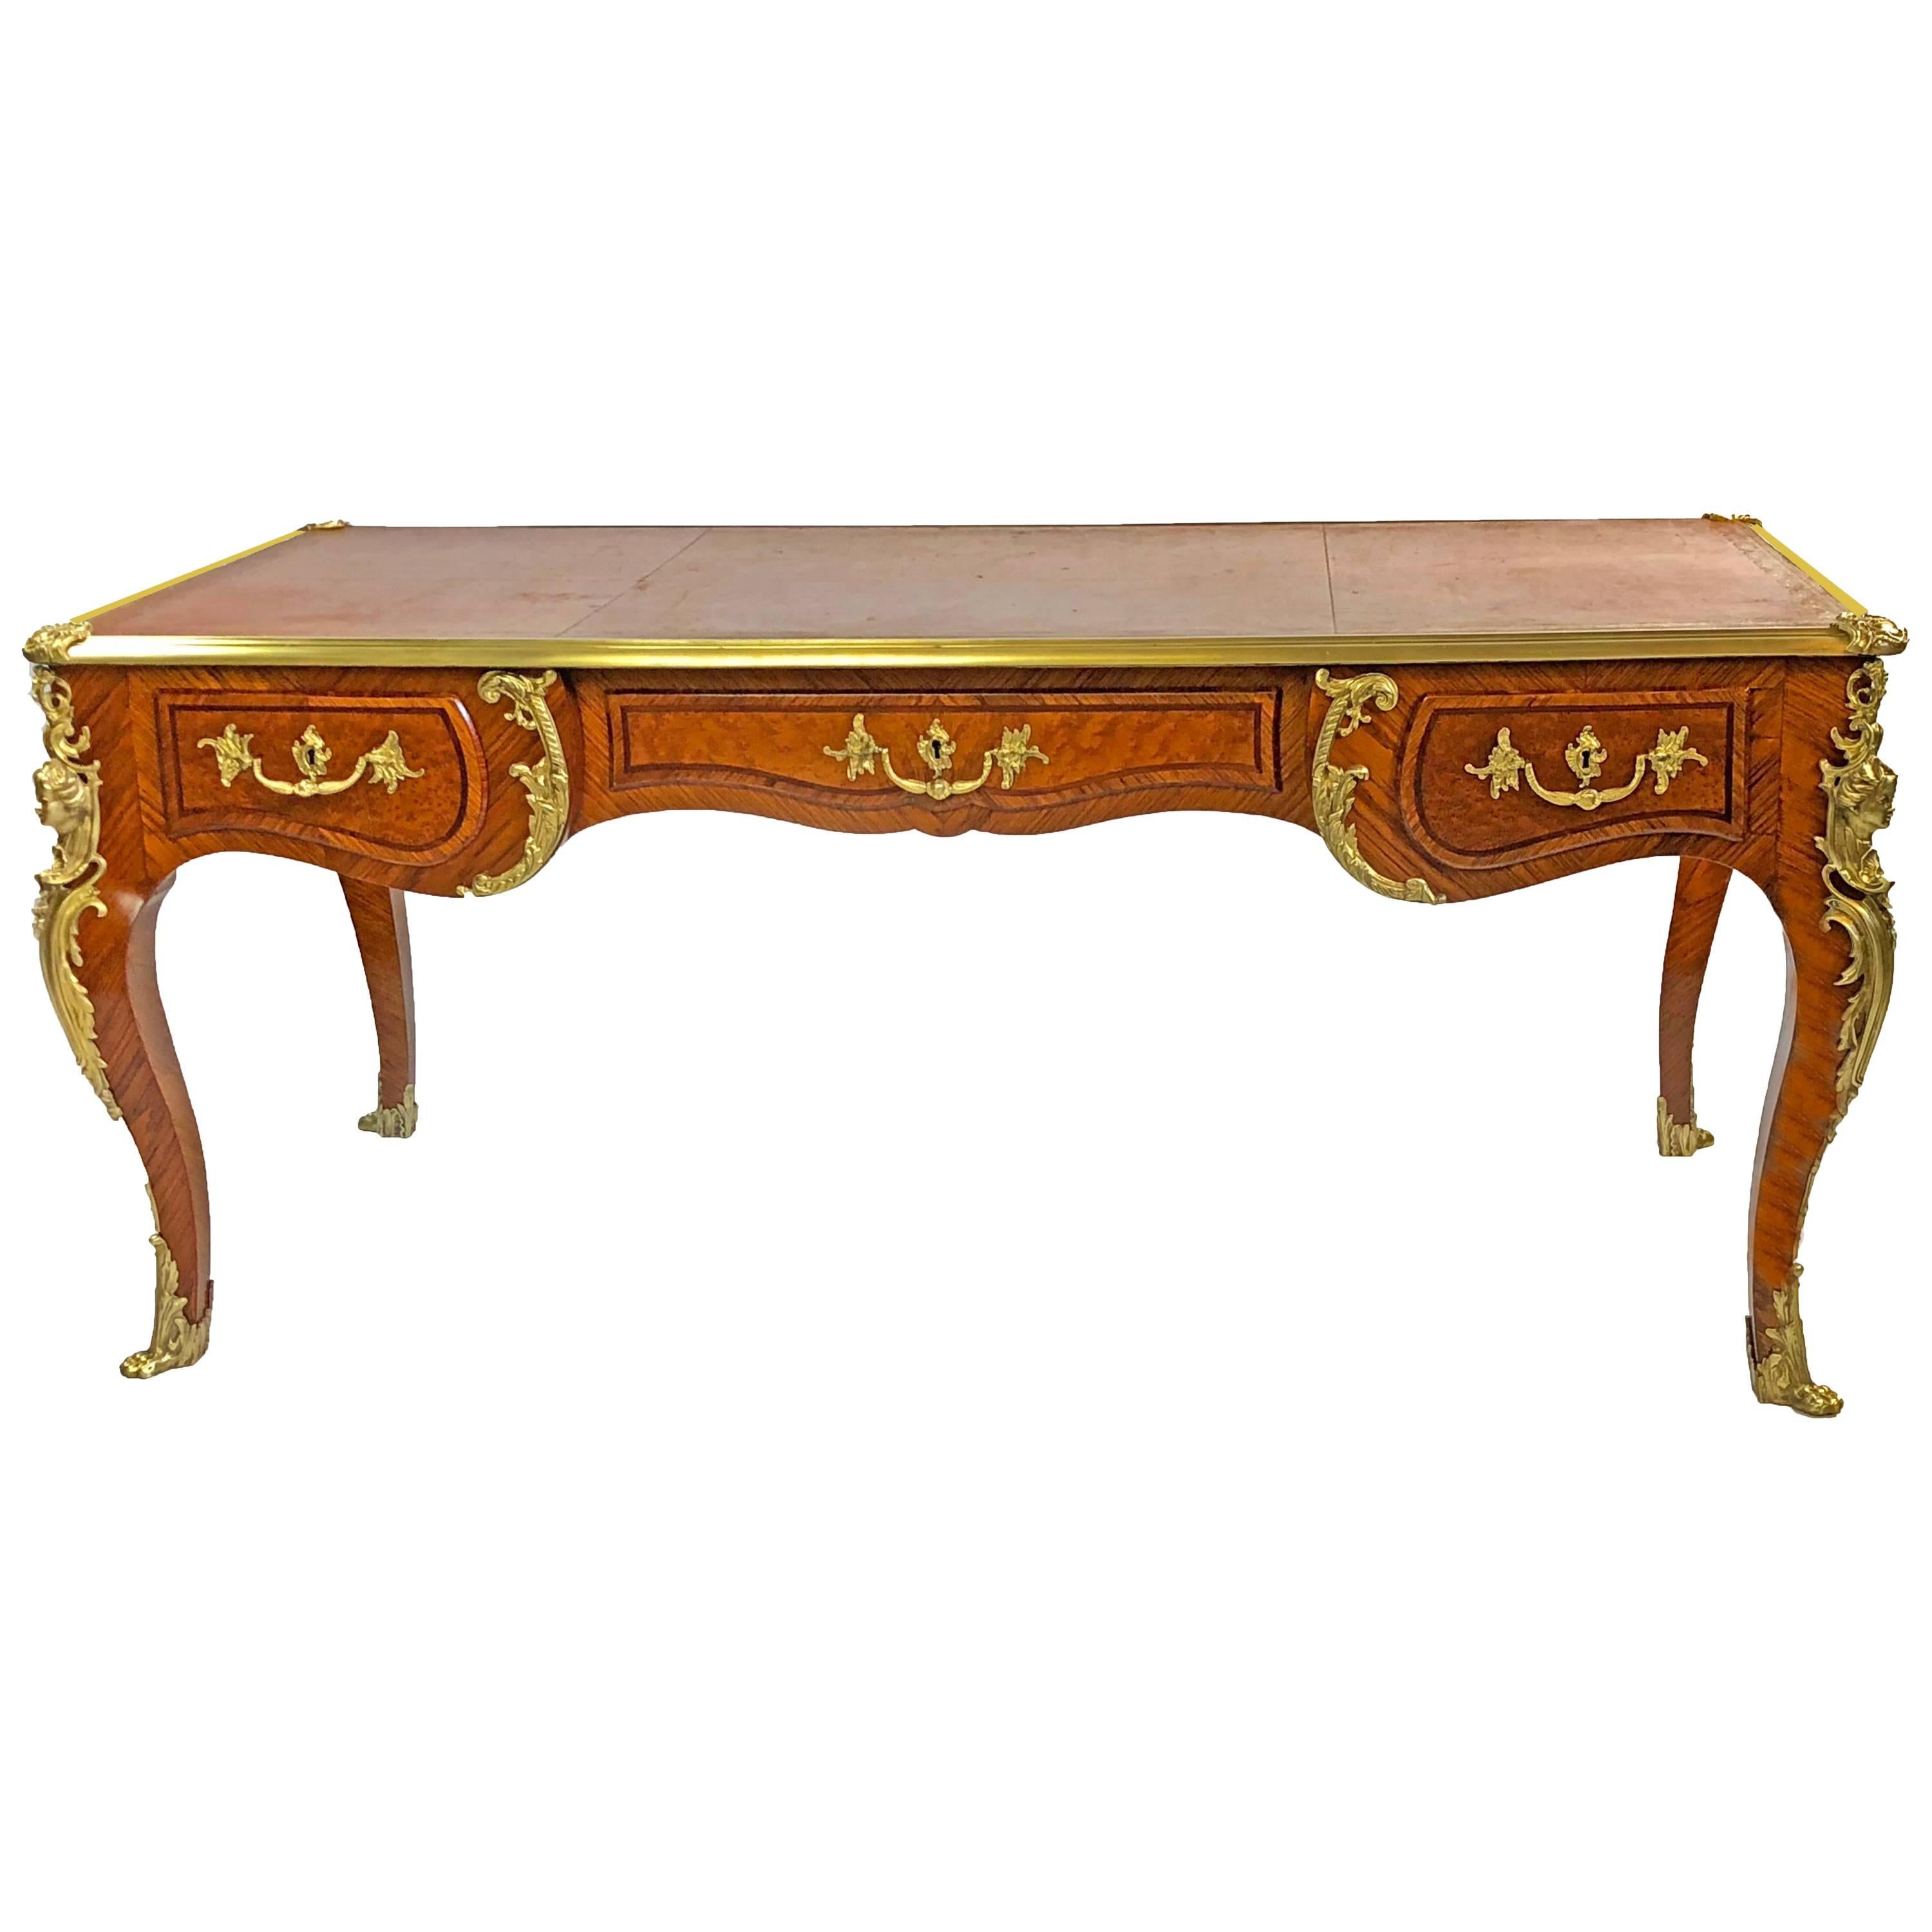 Desk Bureau Plat 19th Century in the Louis XV Manner